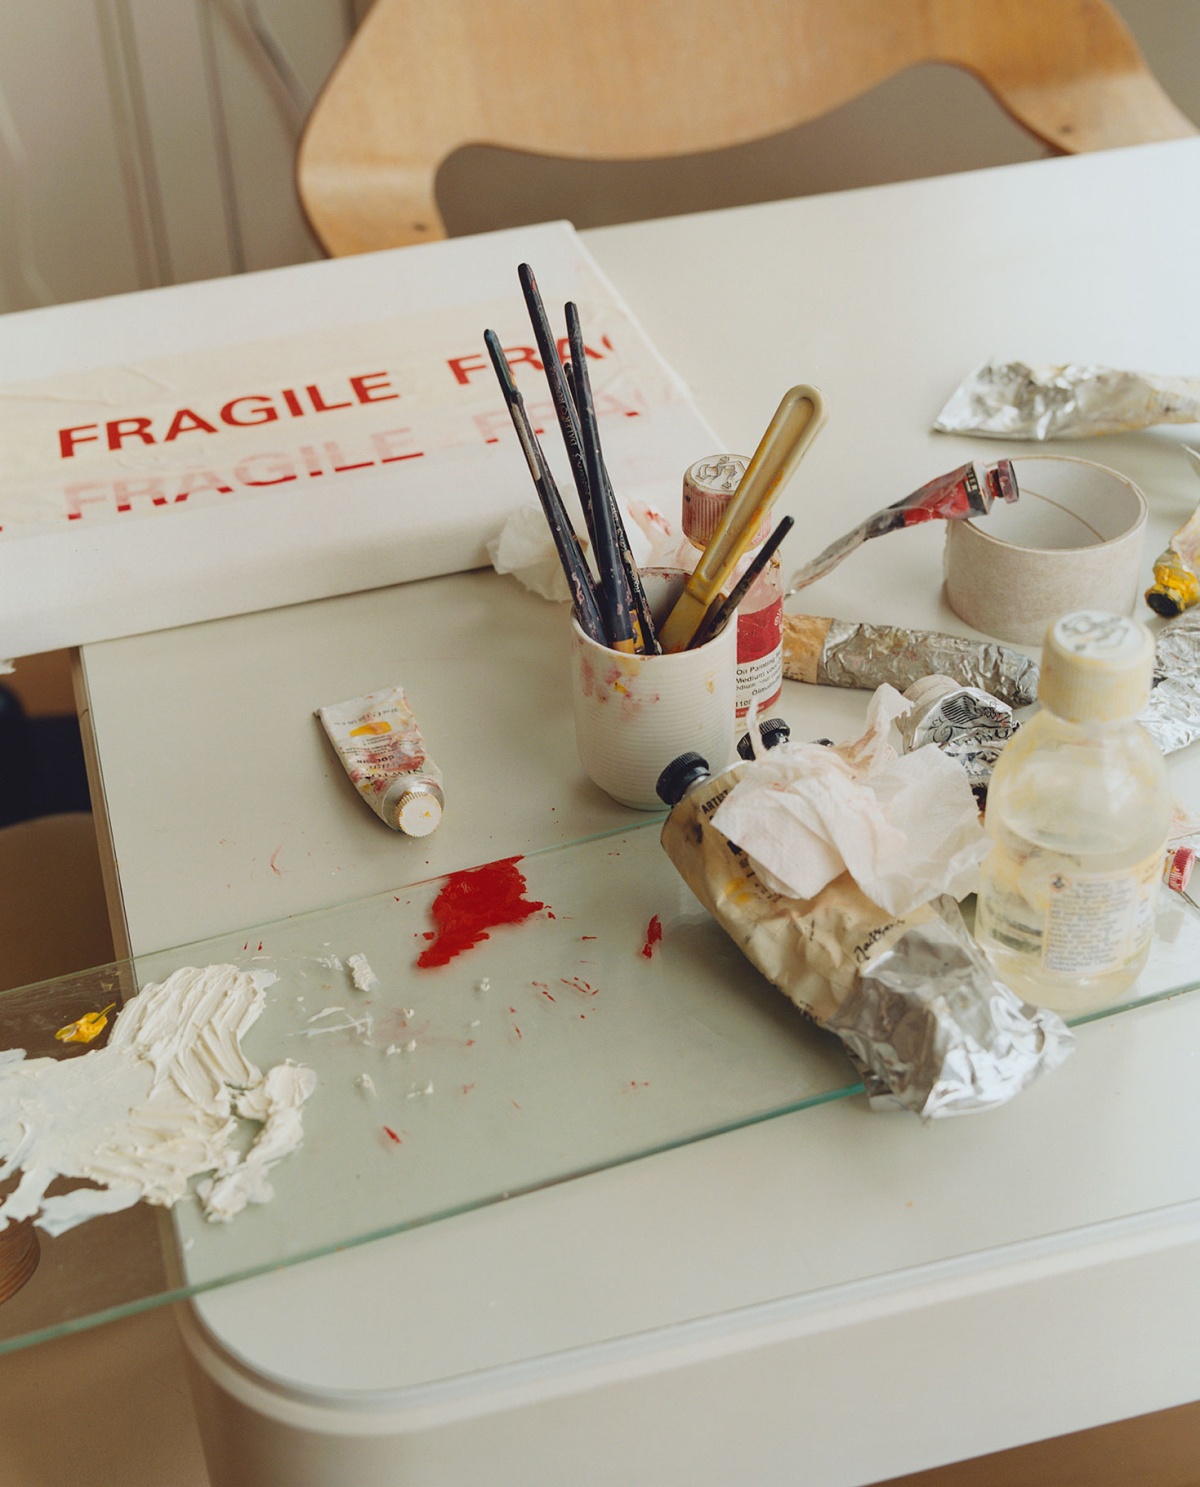 frances wilks painting table